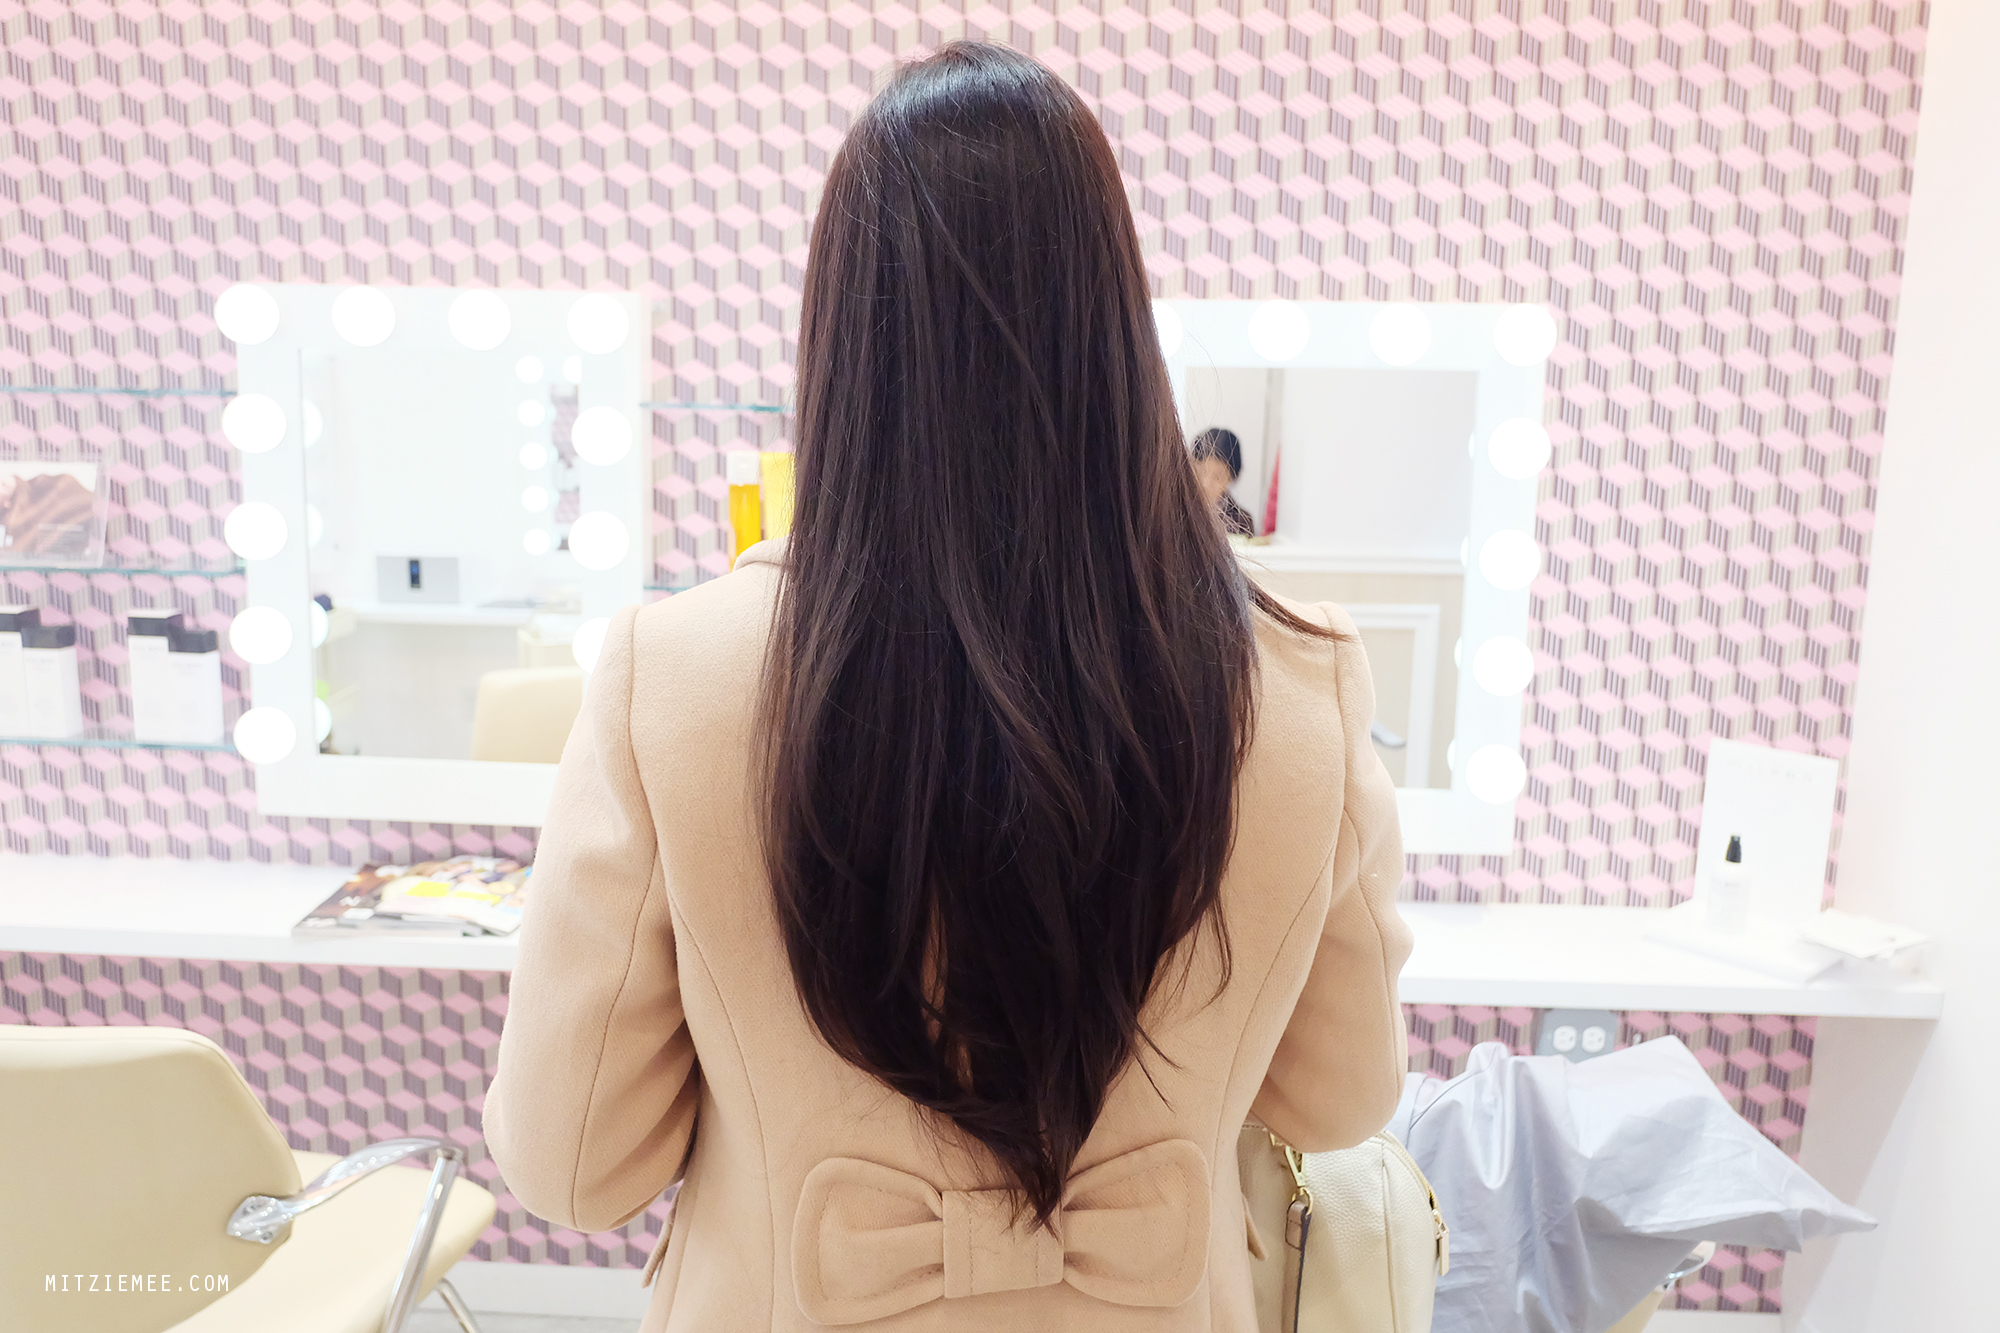 Brave, Japanese hair salon in NYC